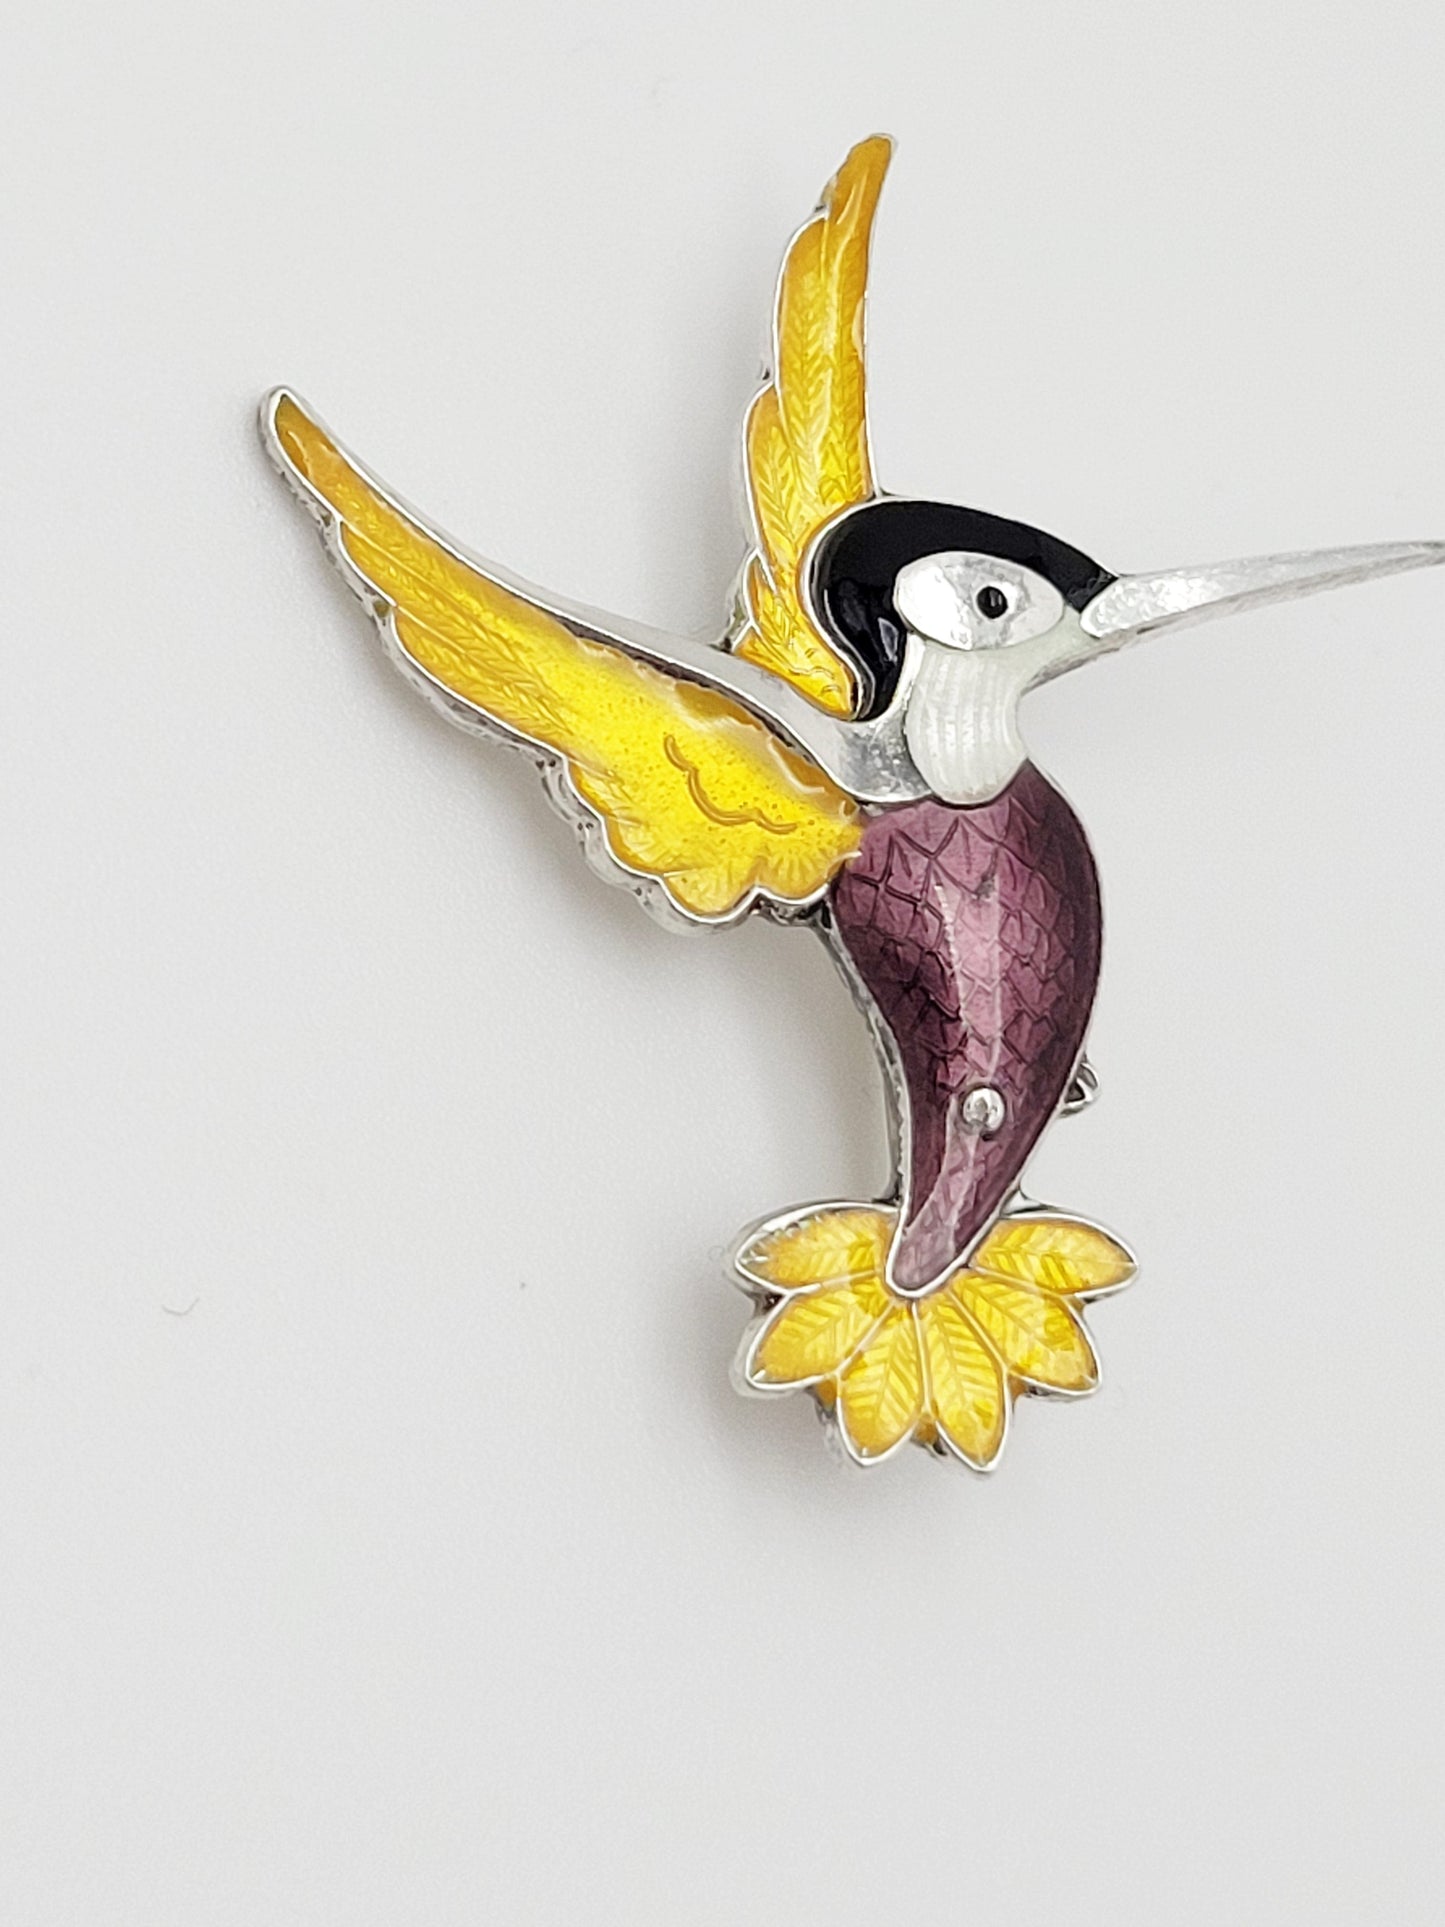 Volmer Bahner Jewelry Dane Volmer Bahner Sterling Enamel Purple Yellow Hummingbird Brooch 1950s